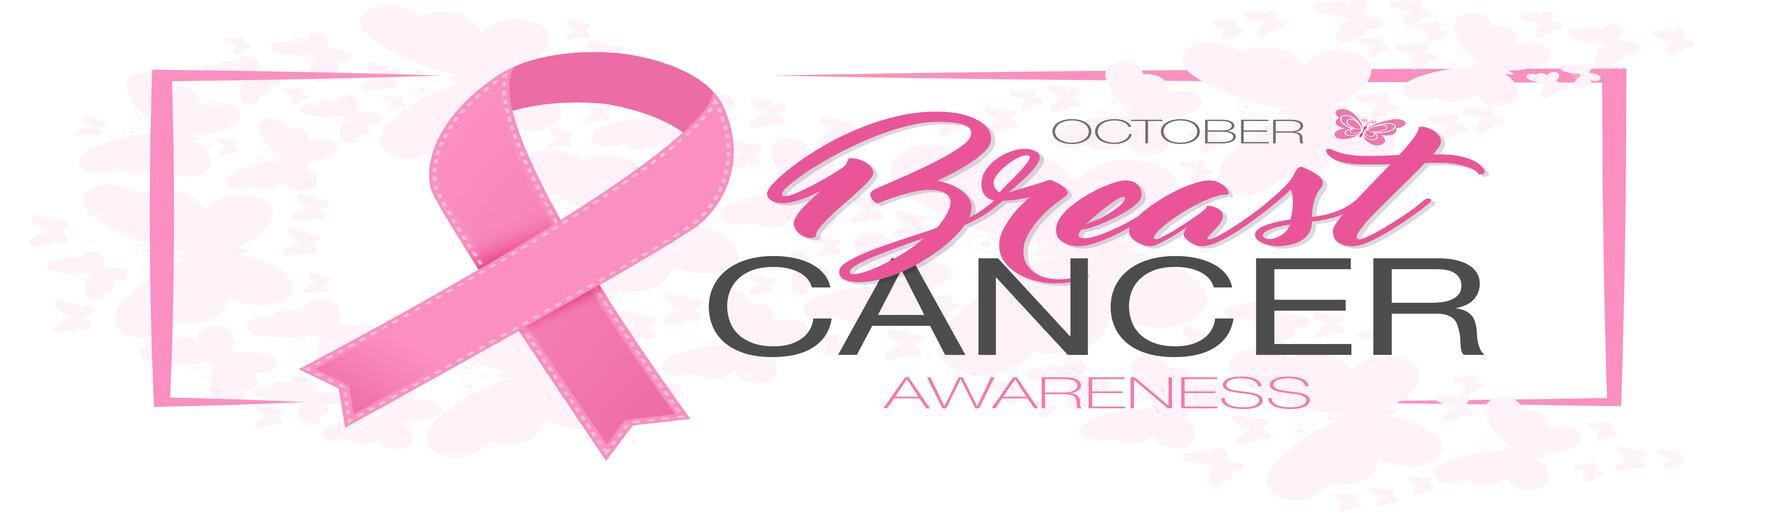 OCTOBER
Breast Cancer Awareness